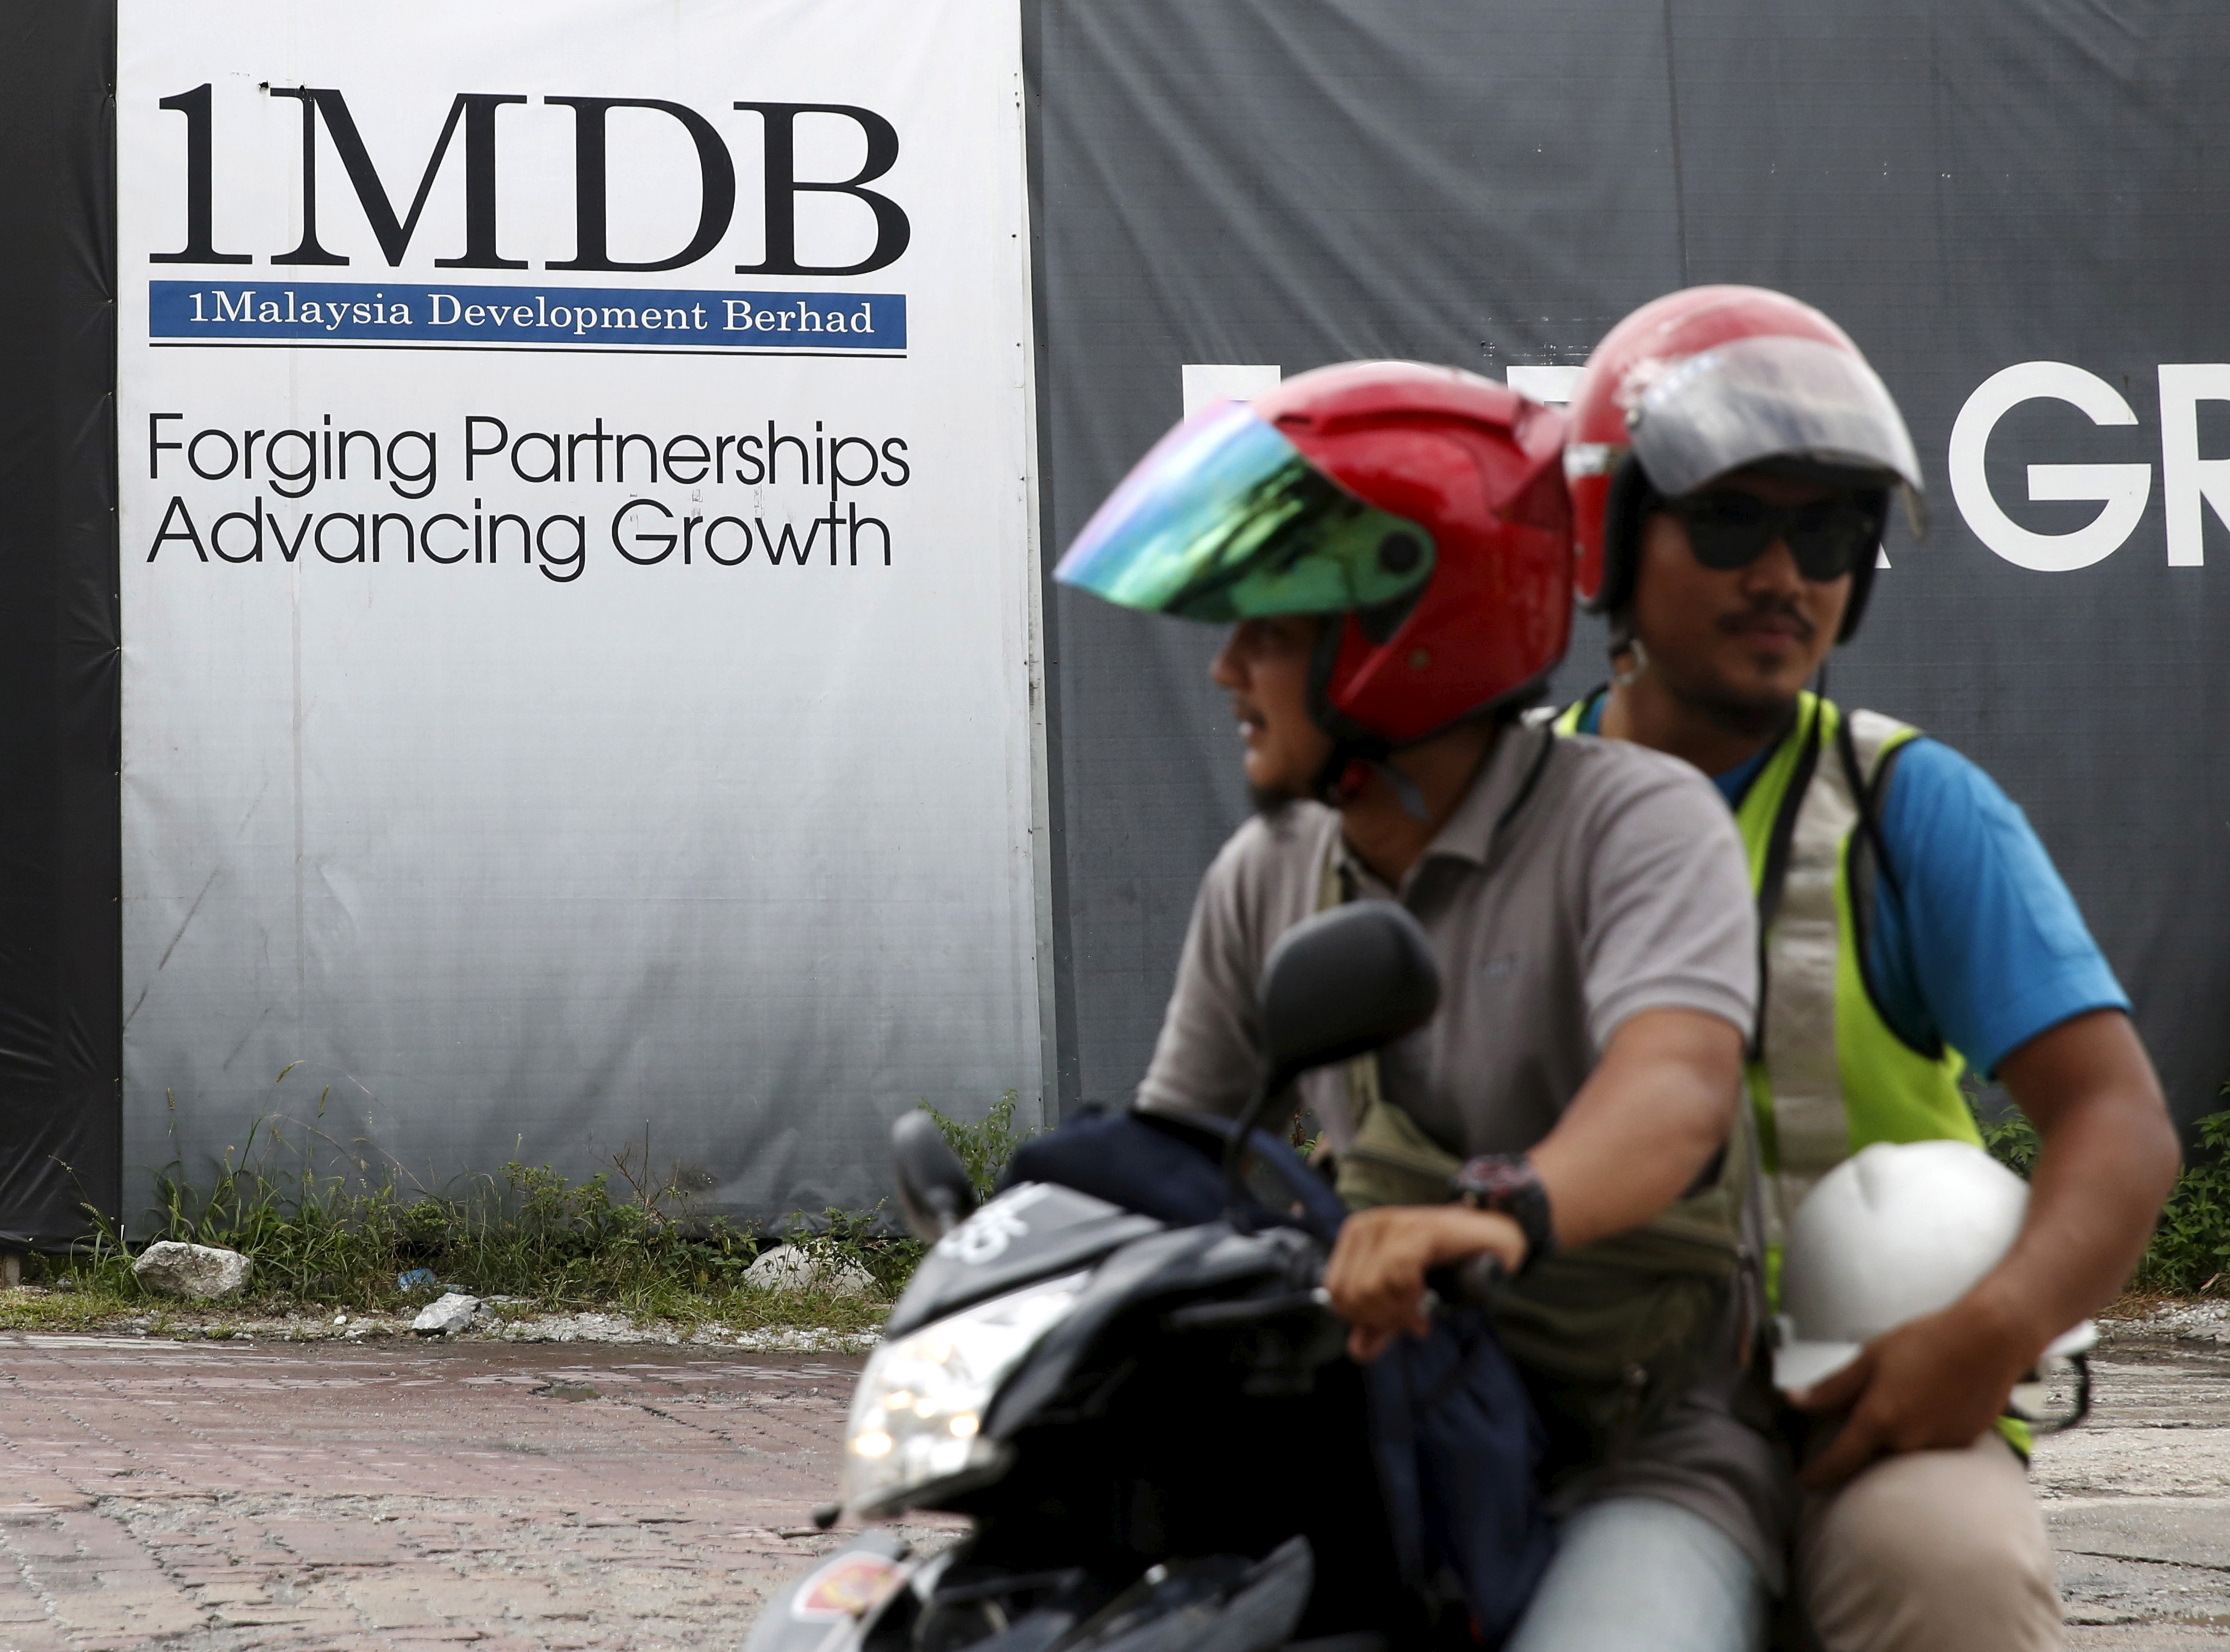 Motorcyclists pass a 1Malaysia Development Berhad (1MDB) billboard at the Tun Razak Exchange development in Kuala Lumpur, Malaysia